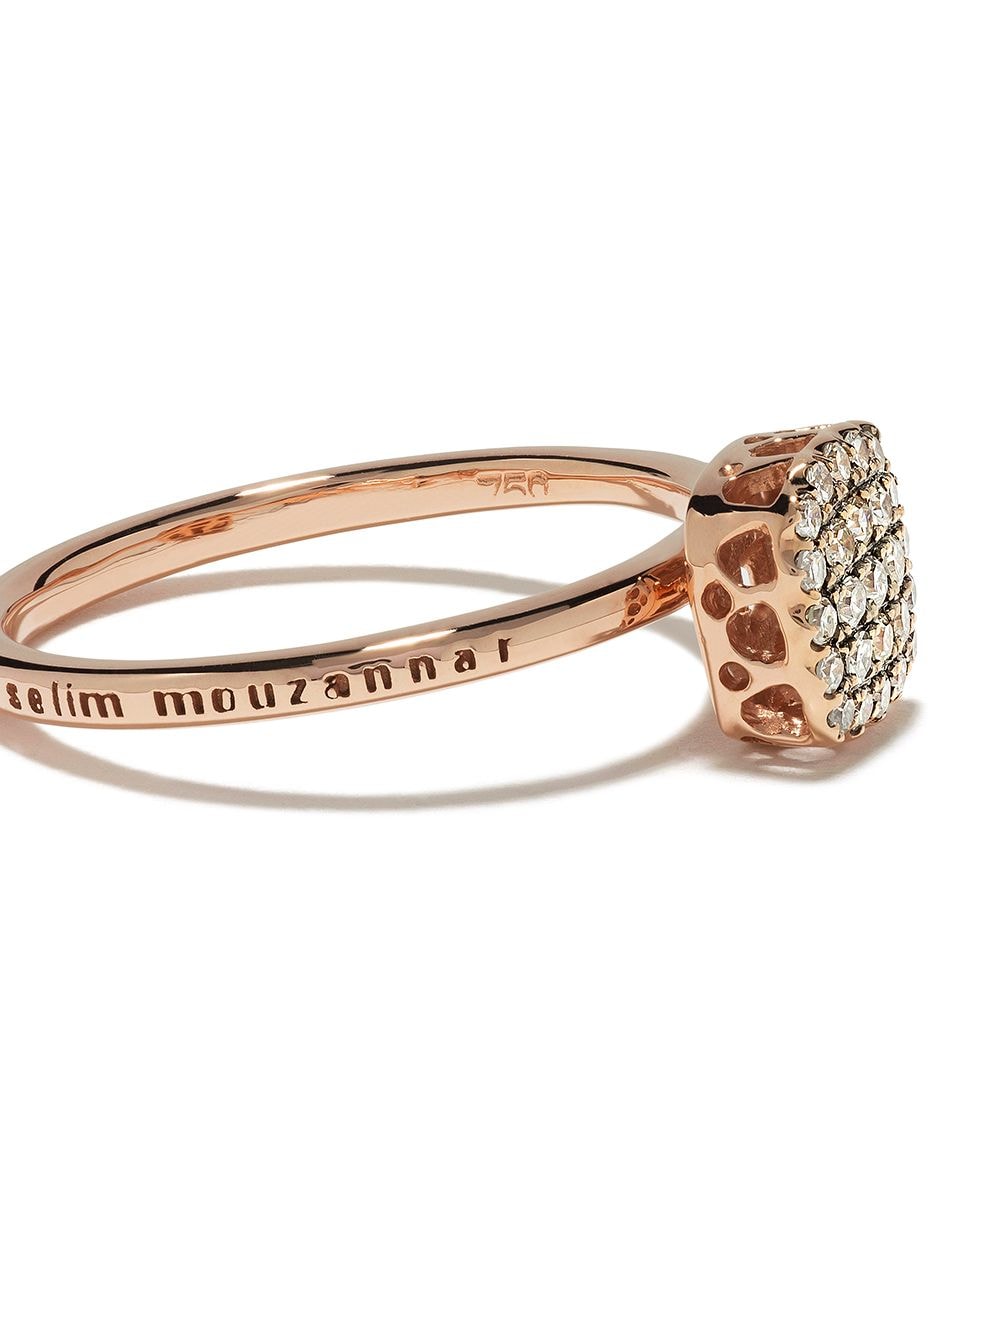 Shop Selim Mouzannar 18kt Rose Gold Diamond Beirut Ring